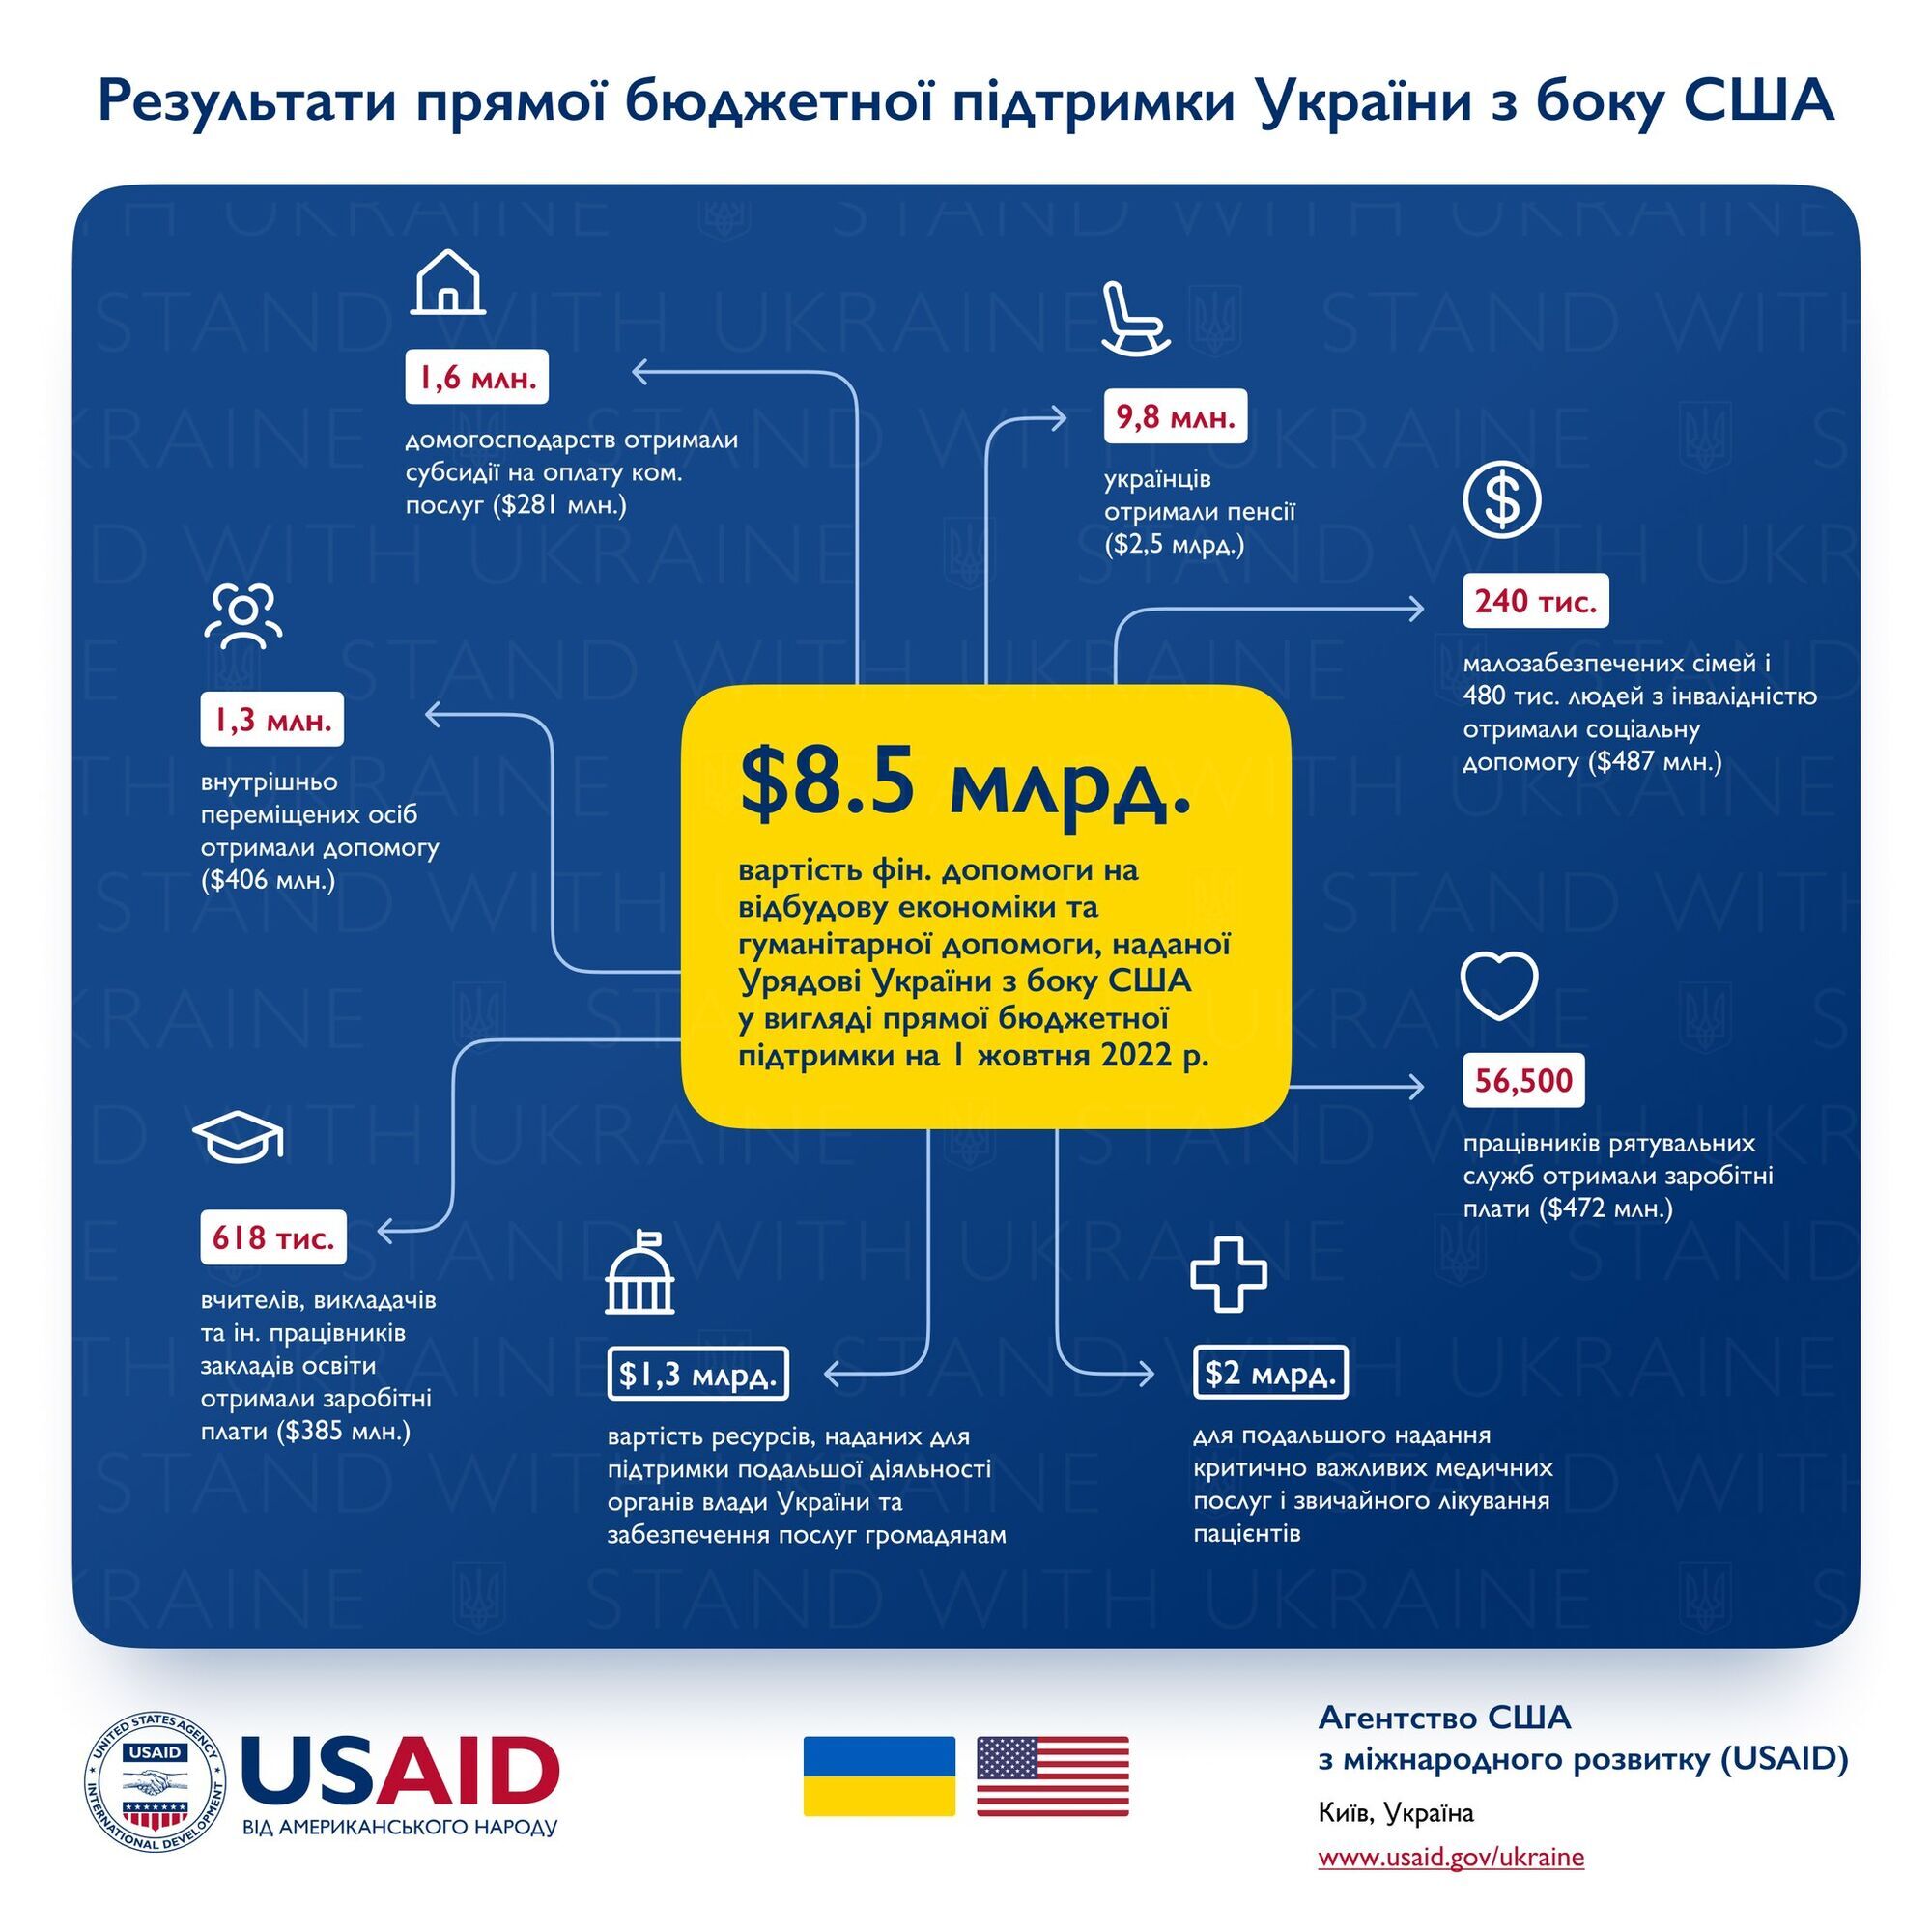 Украина получила от Агентства США по международному развитию USAID $8,5 млрд помощи с начала вторжения РФ